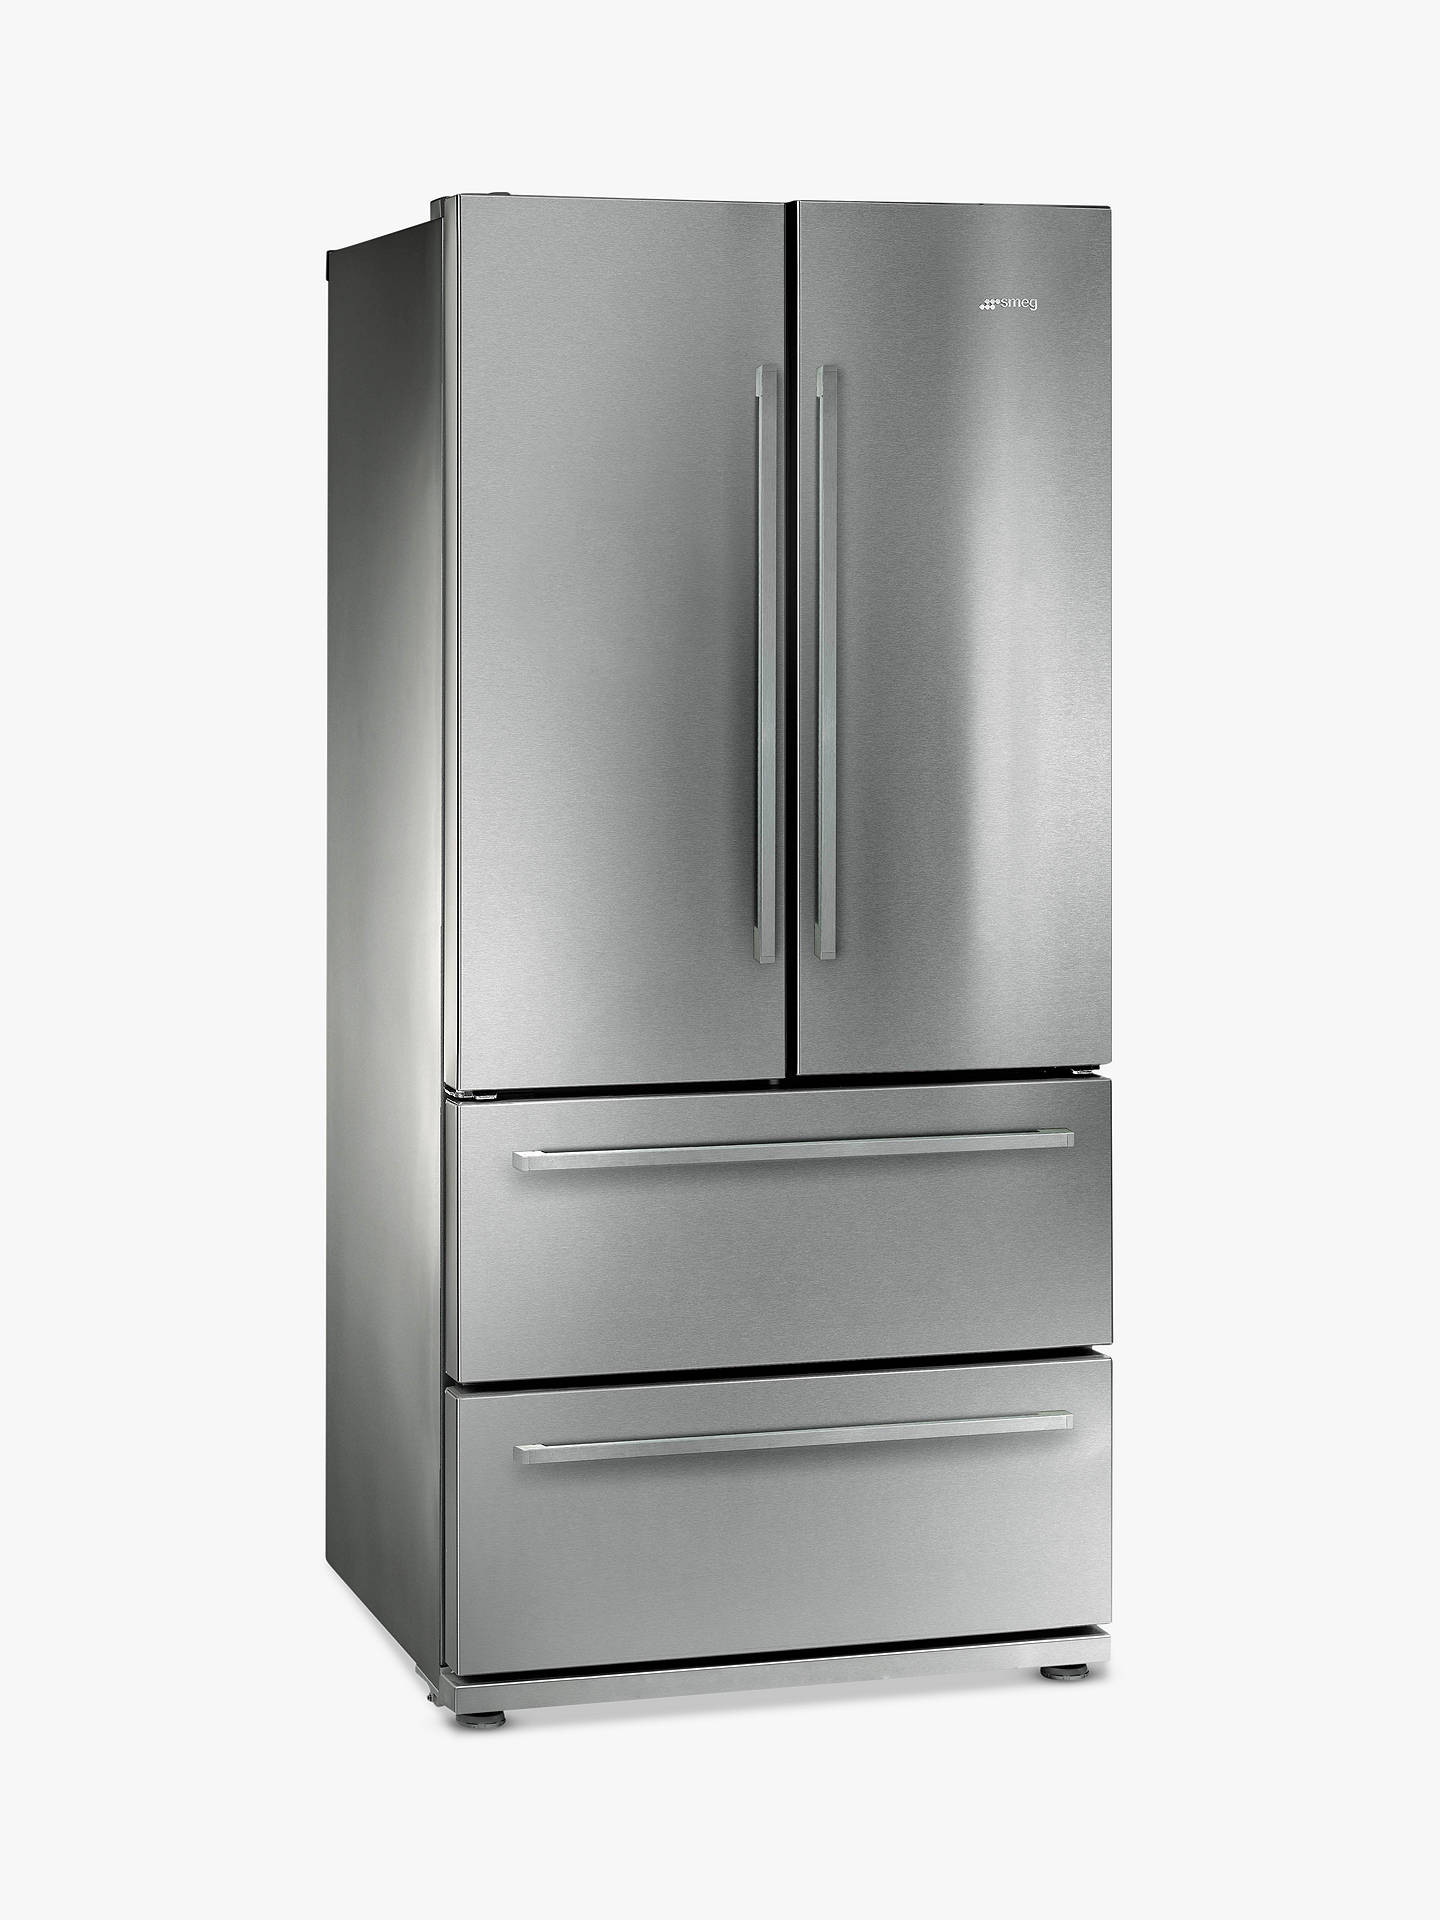 Smeg Fq55fx1 4 Door American Style Fridge Freezer A Energy